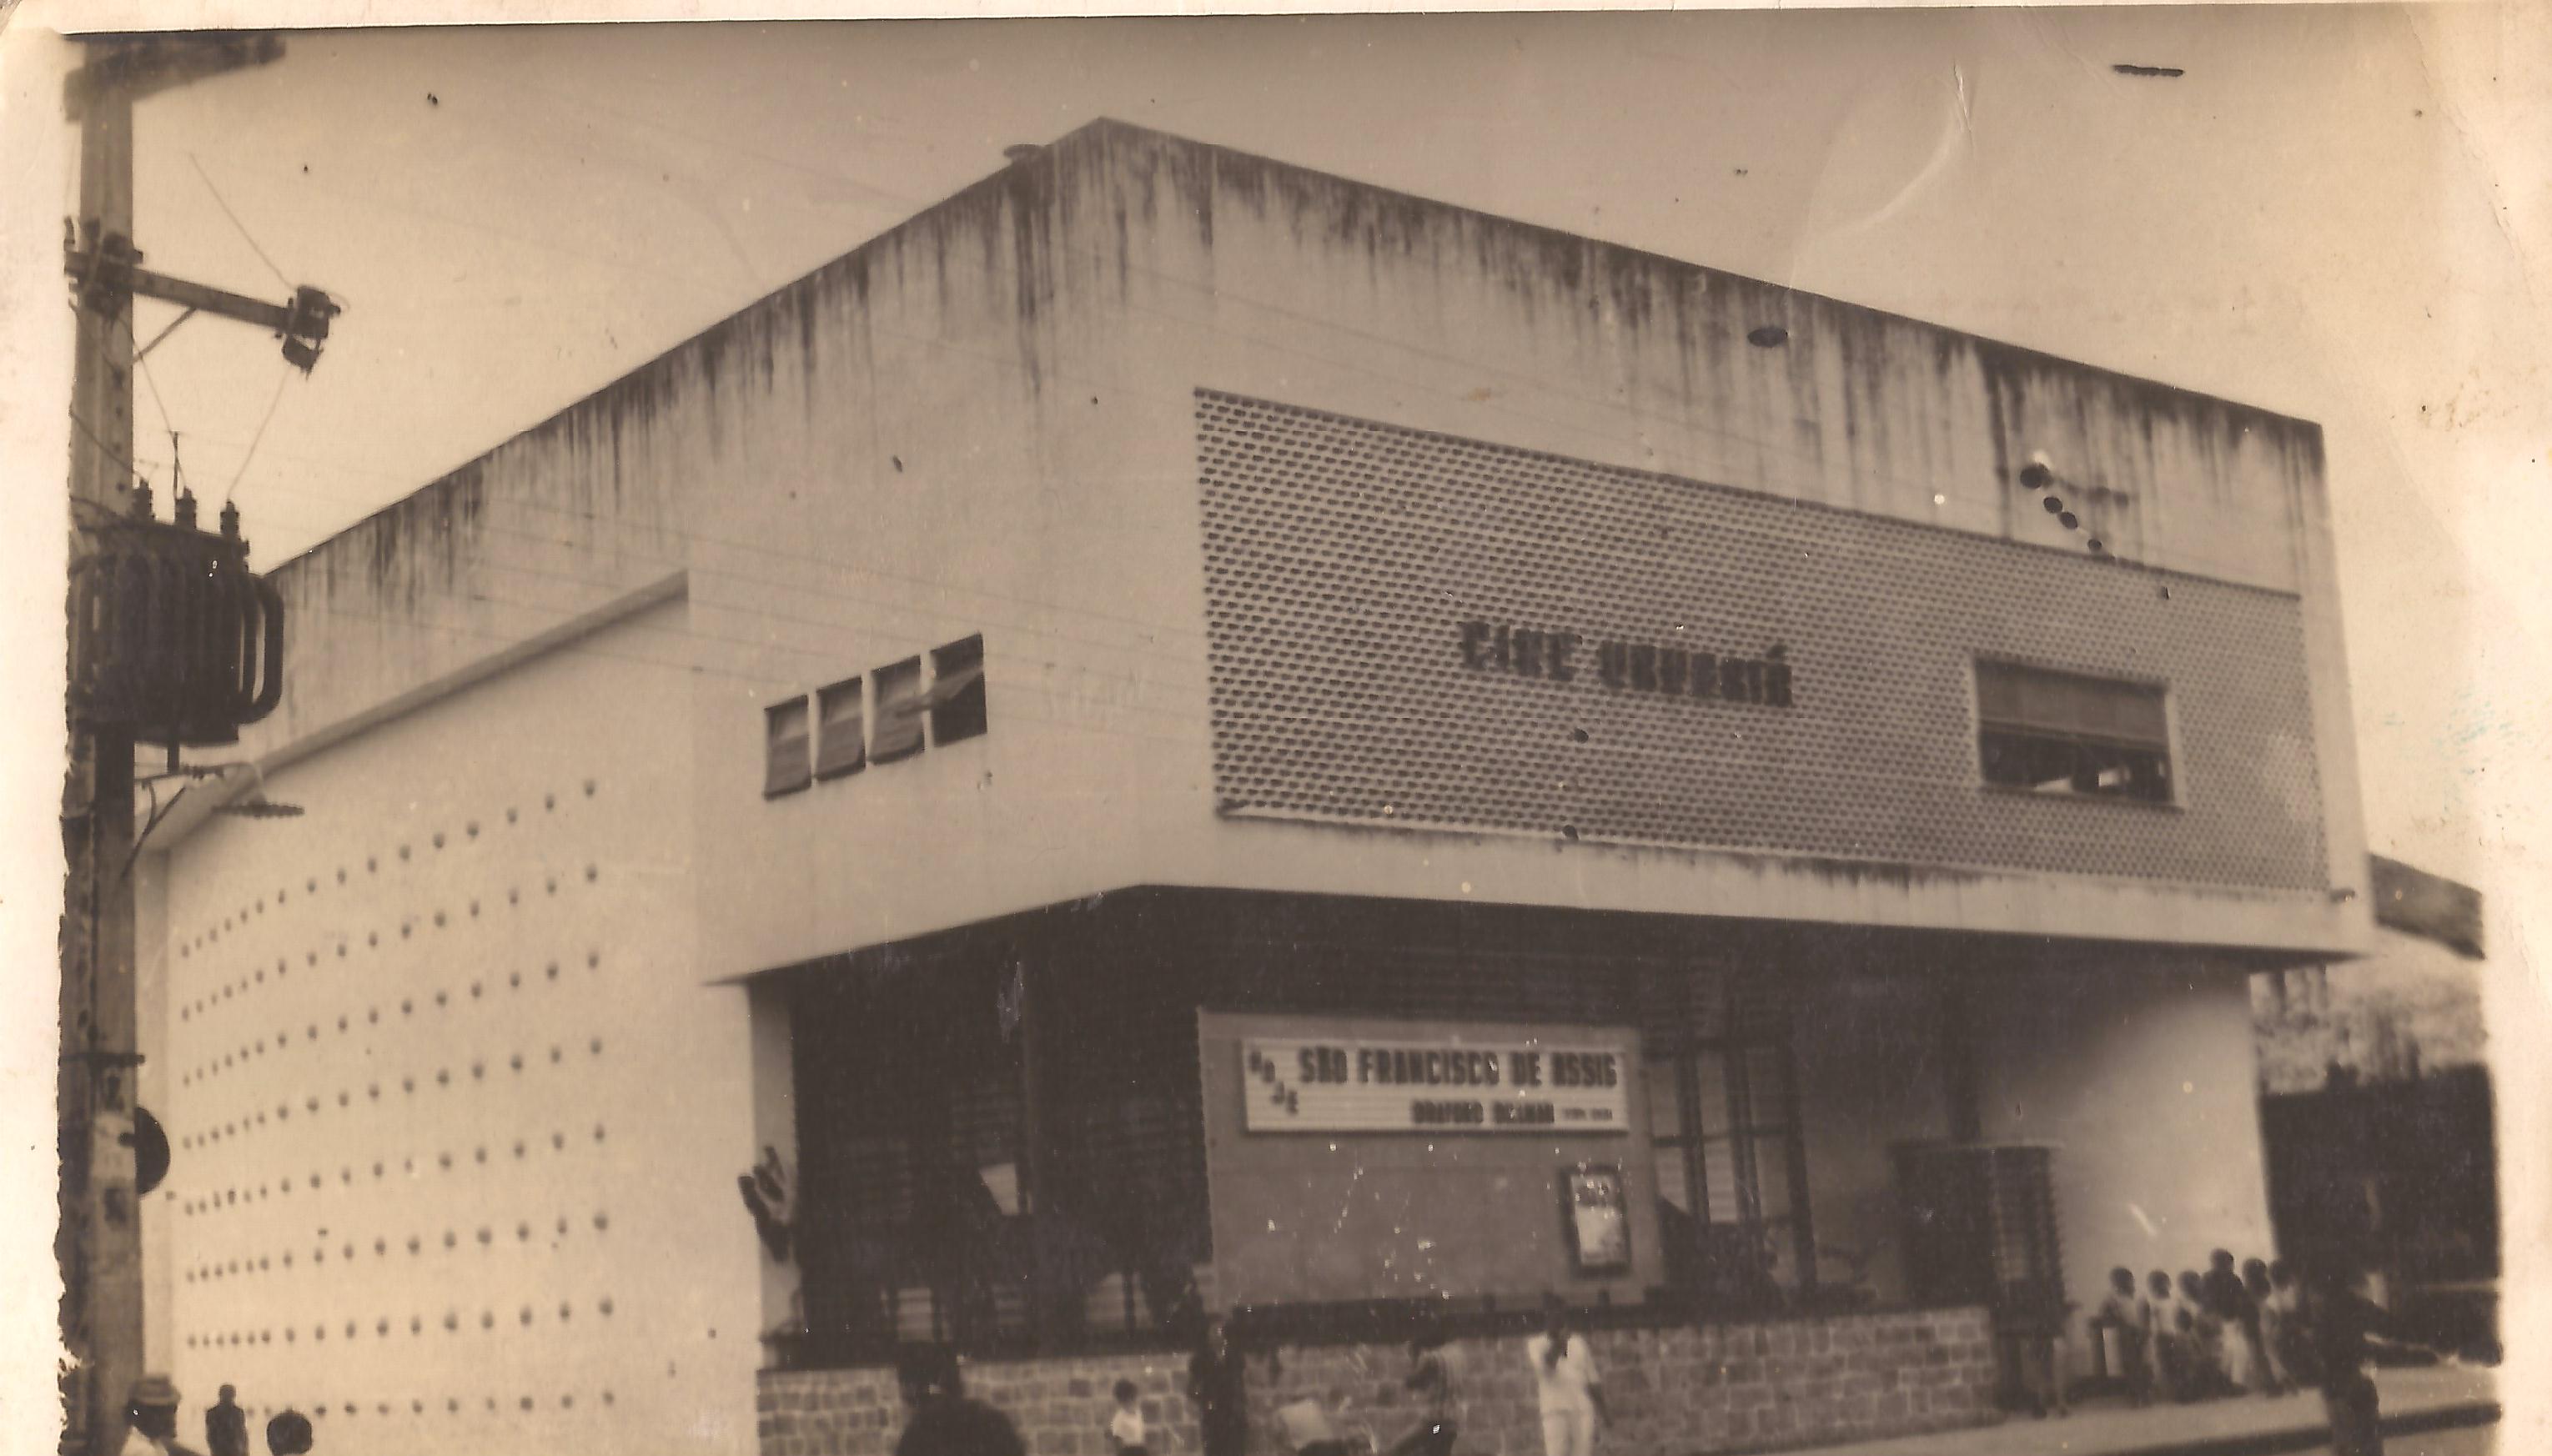 Cine Teatro Urubatã - Proprietário Arnaud Nogueira - Goiana - PE 25-05-57